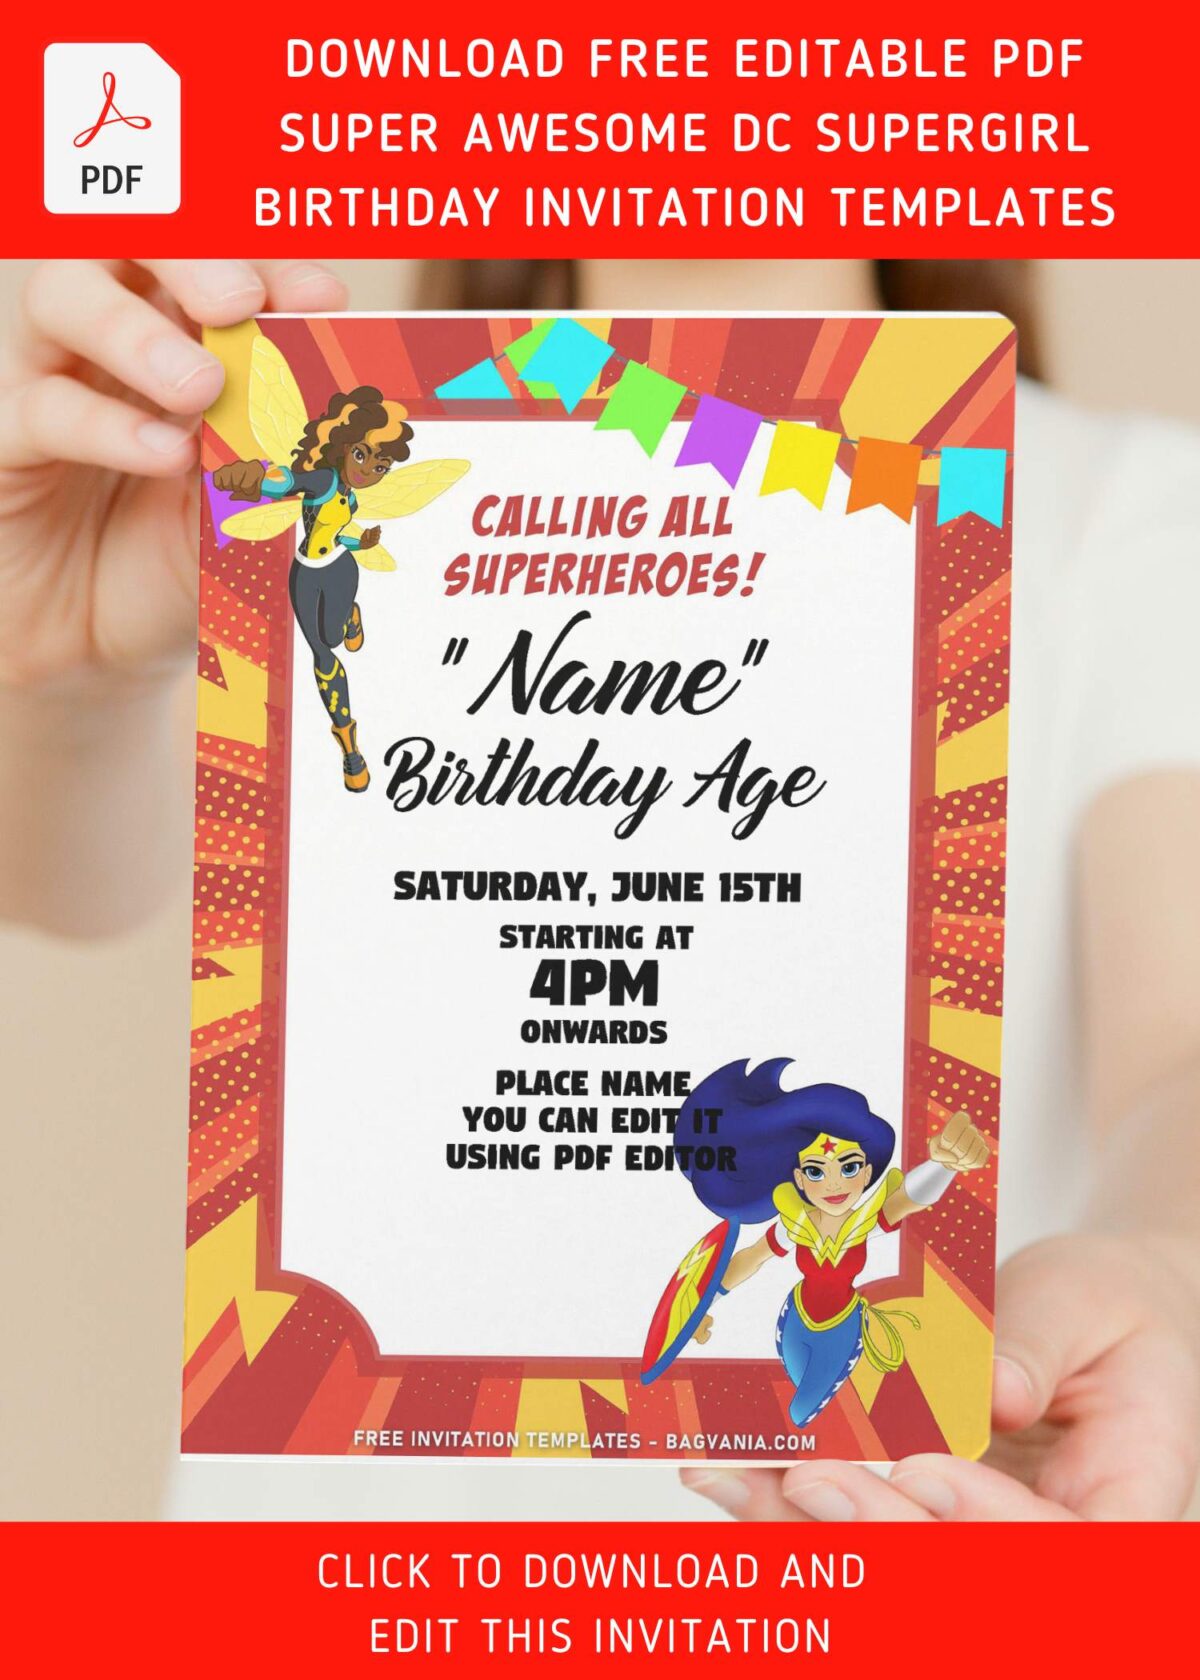 (Free Editable PDF) Super FUN-TASTIC DC Superhero Girls Birthday Invitation Templates with Tinkerbell